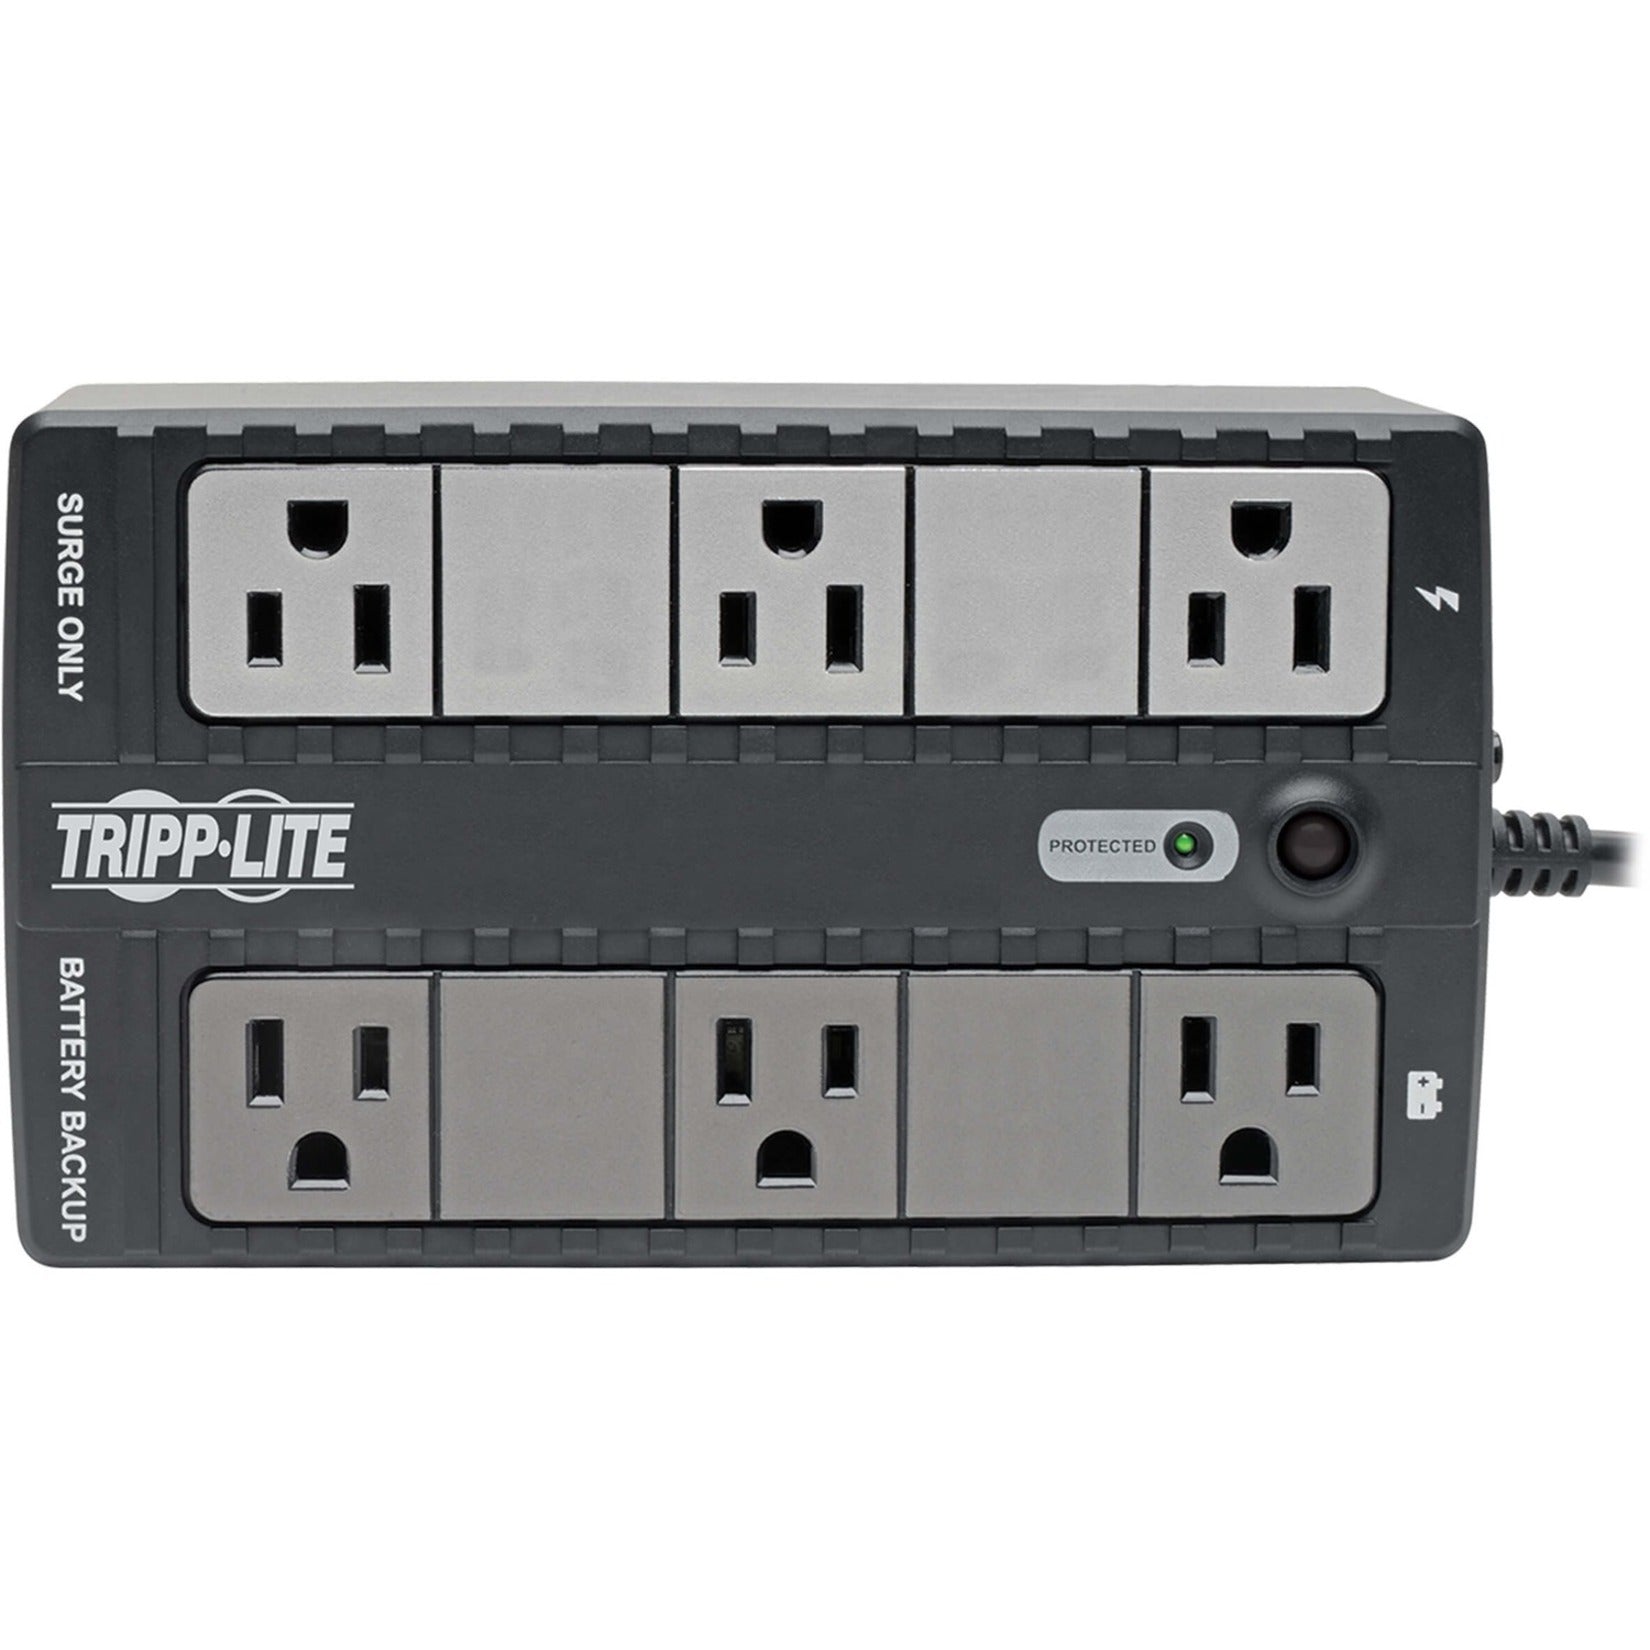 Tripp Lite INTERNET350U Internet Office UPS 350 VA 6 Outlets 1 RJ11 1 USB 3-Year Warranty